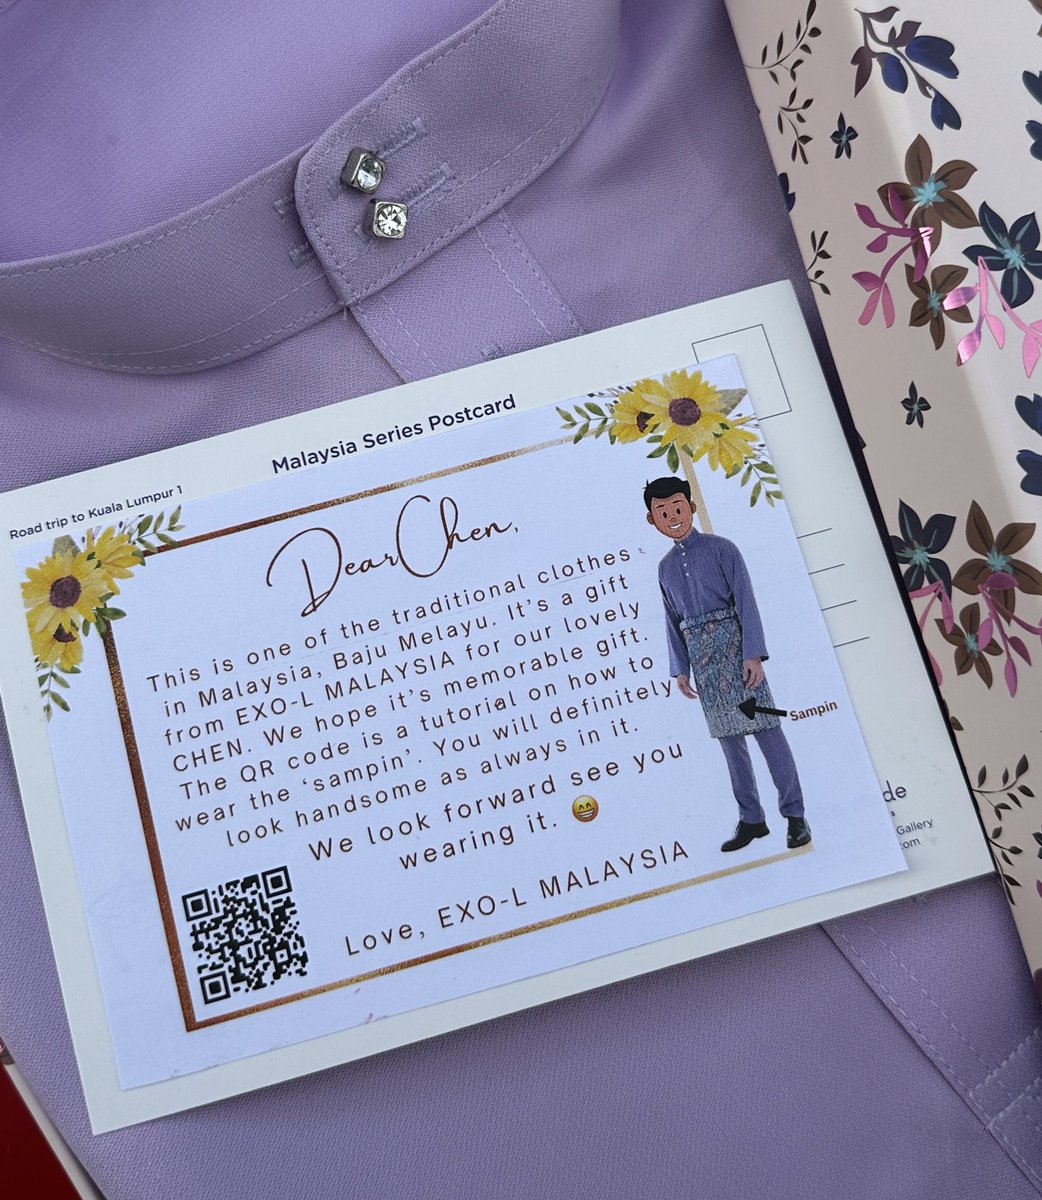 Look at the card we sent to jongdae 🥹🥹

#myGrandCHENWave 
#ChenBalikKampung
#GrandwaveinKL